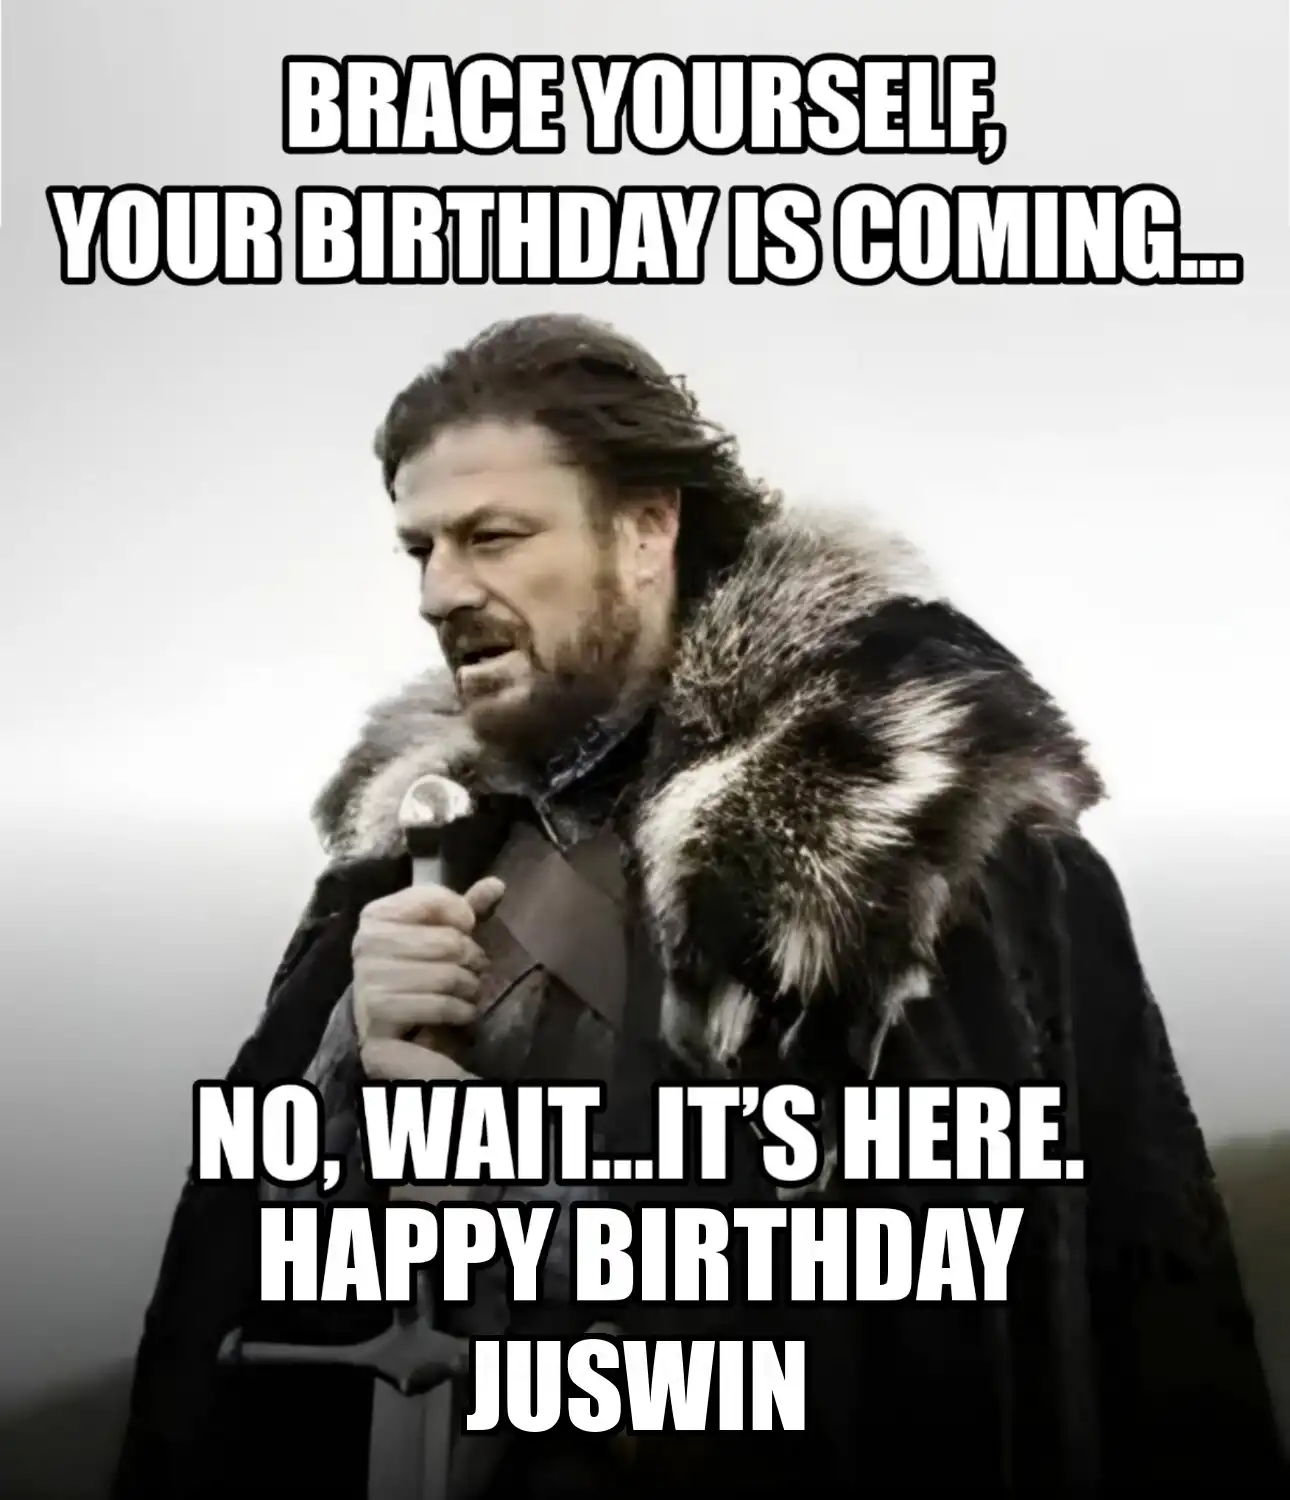 Happy Birthday Juswin Brace Yourself Your Birthday Is Coming Meme